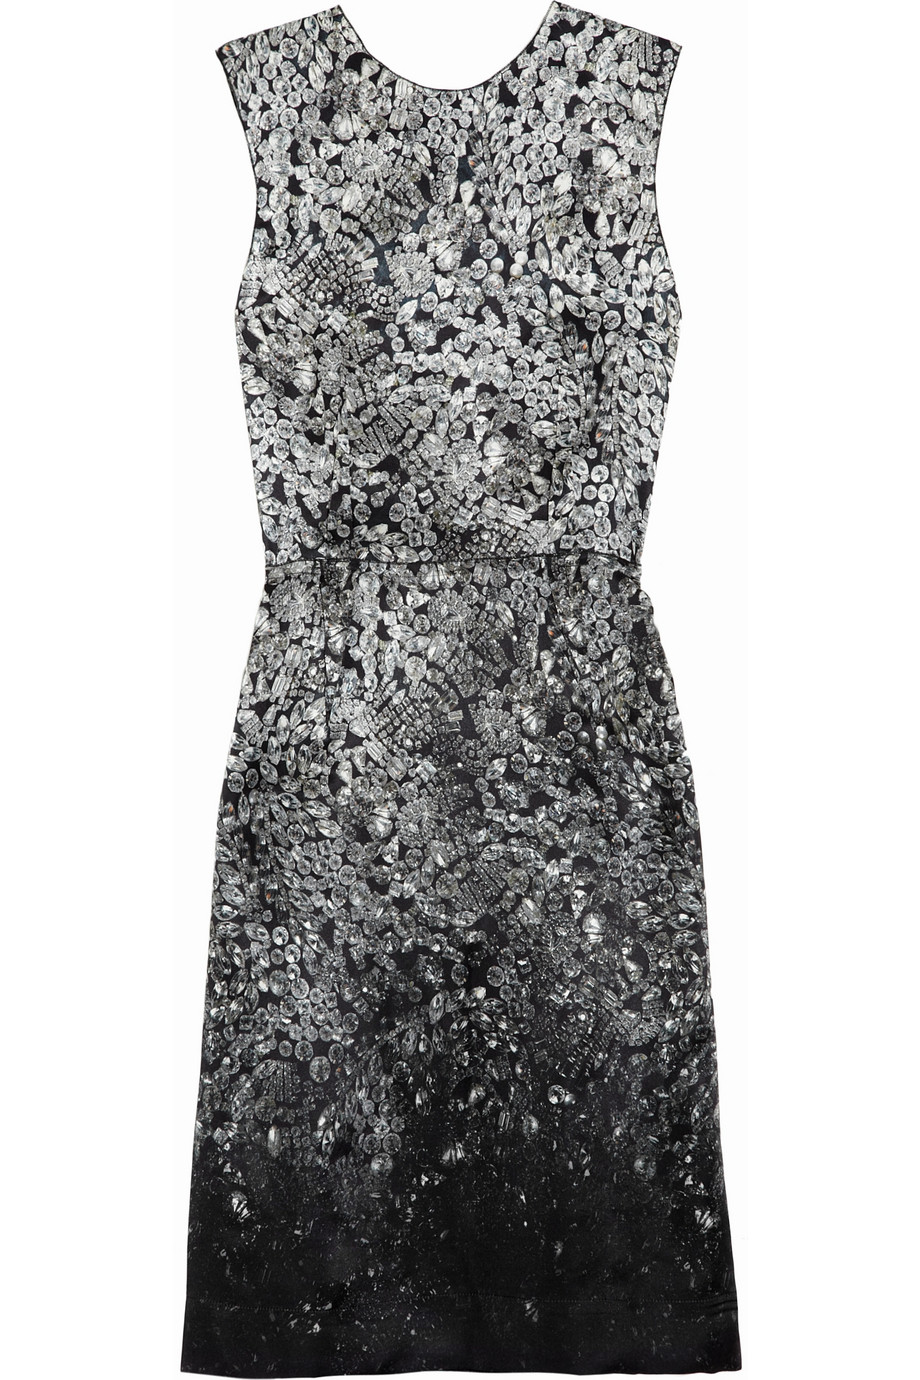 Lanvin Printed Silkblend Satin Dress in Gray | Lyst